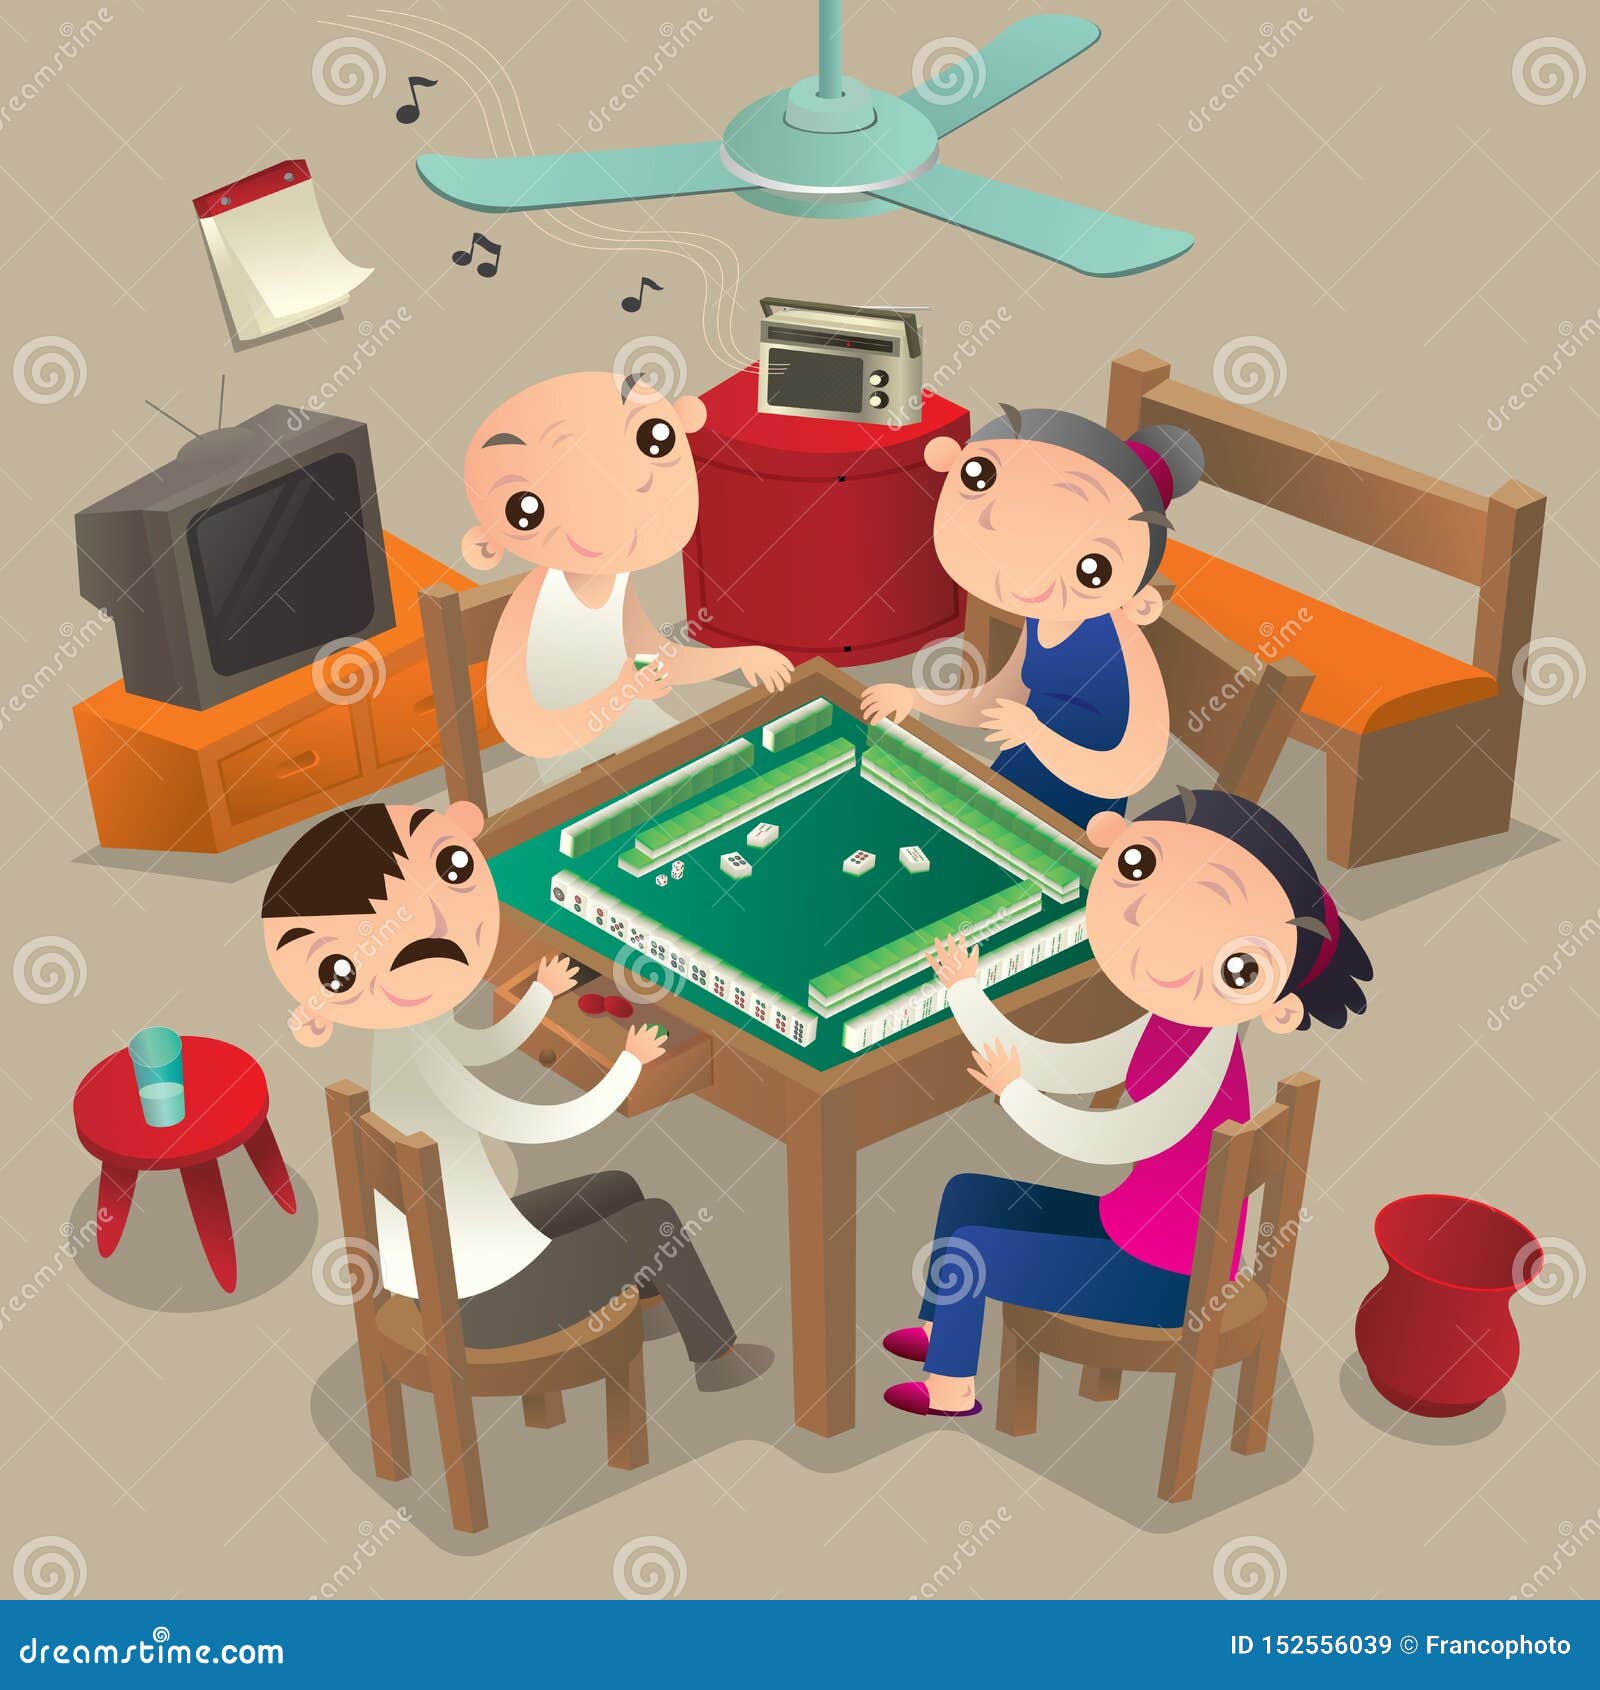 People Playing Mahjong Stock Illustrations 6 People Playing